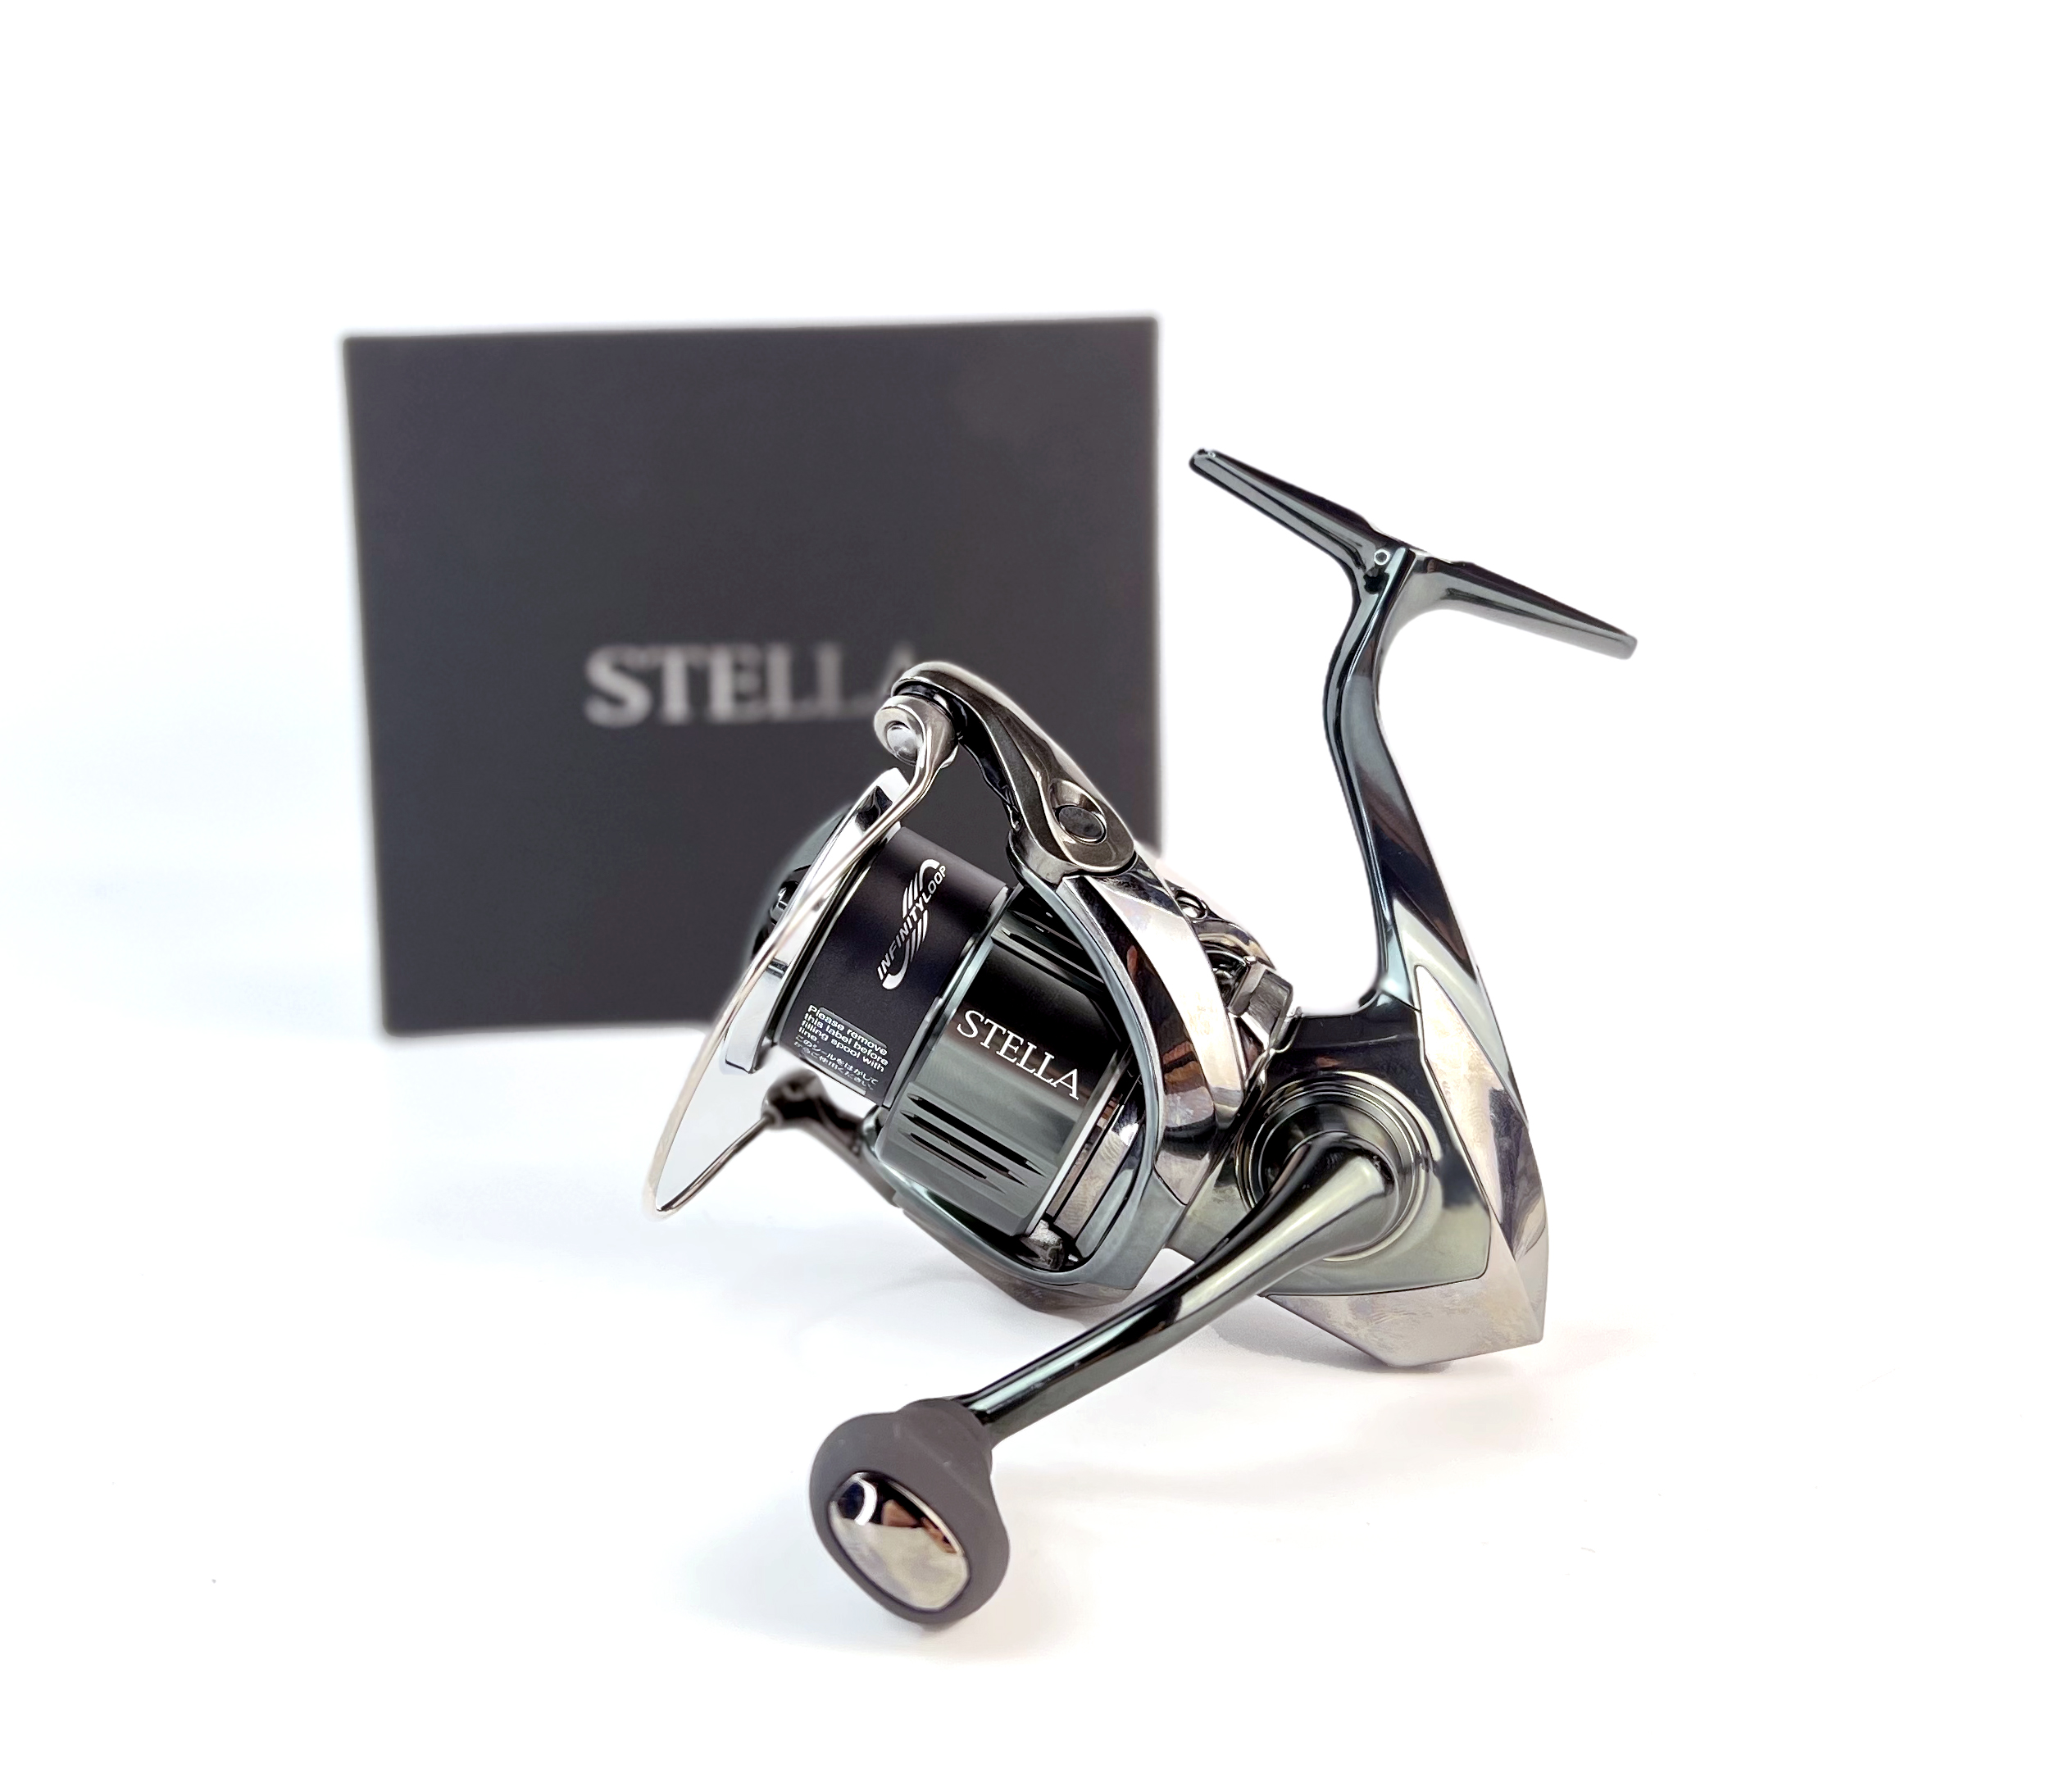 Shimano Stella 2500, 3000, 4000